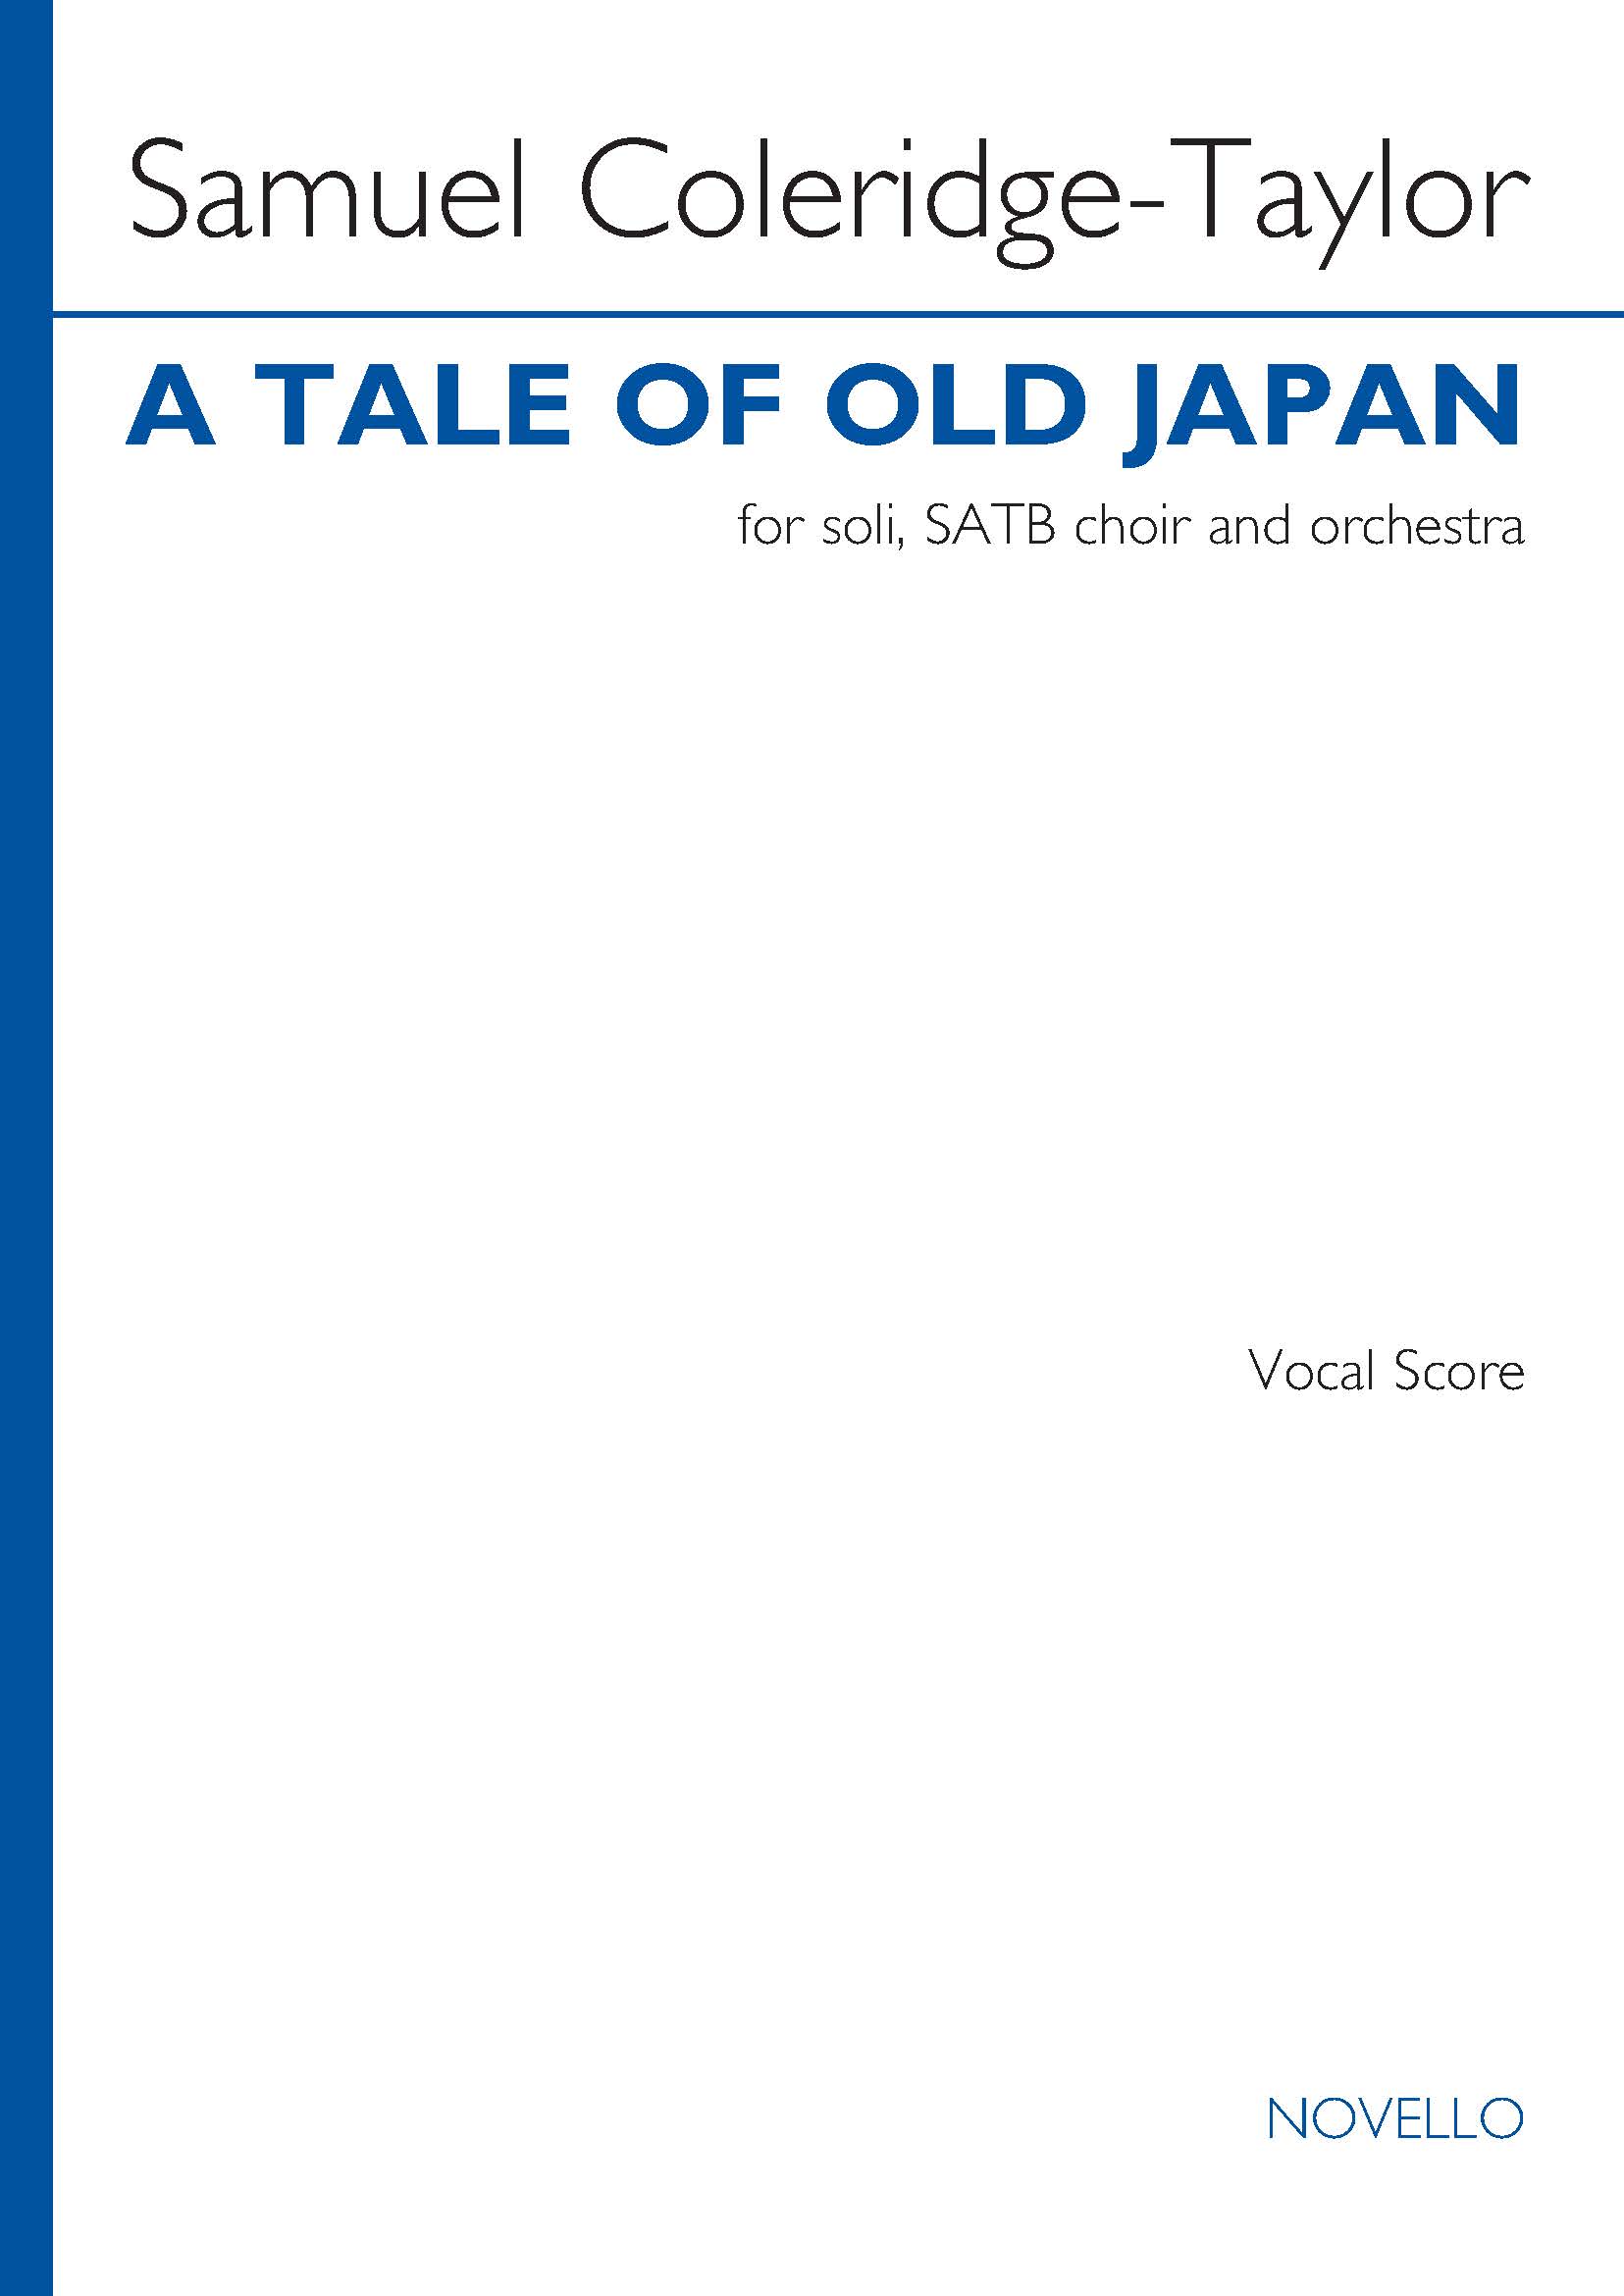 Samuel Coleridge-Taylor: A Tale of Old Japan